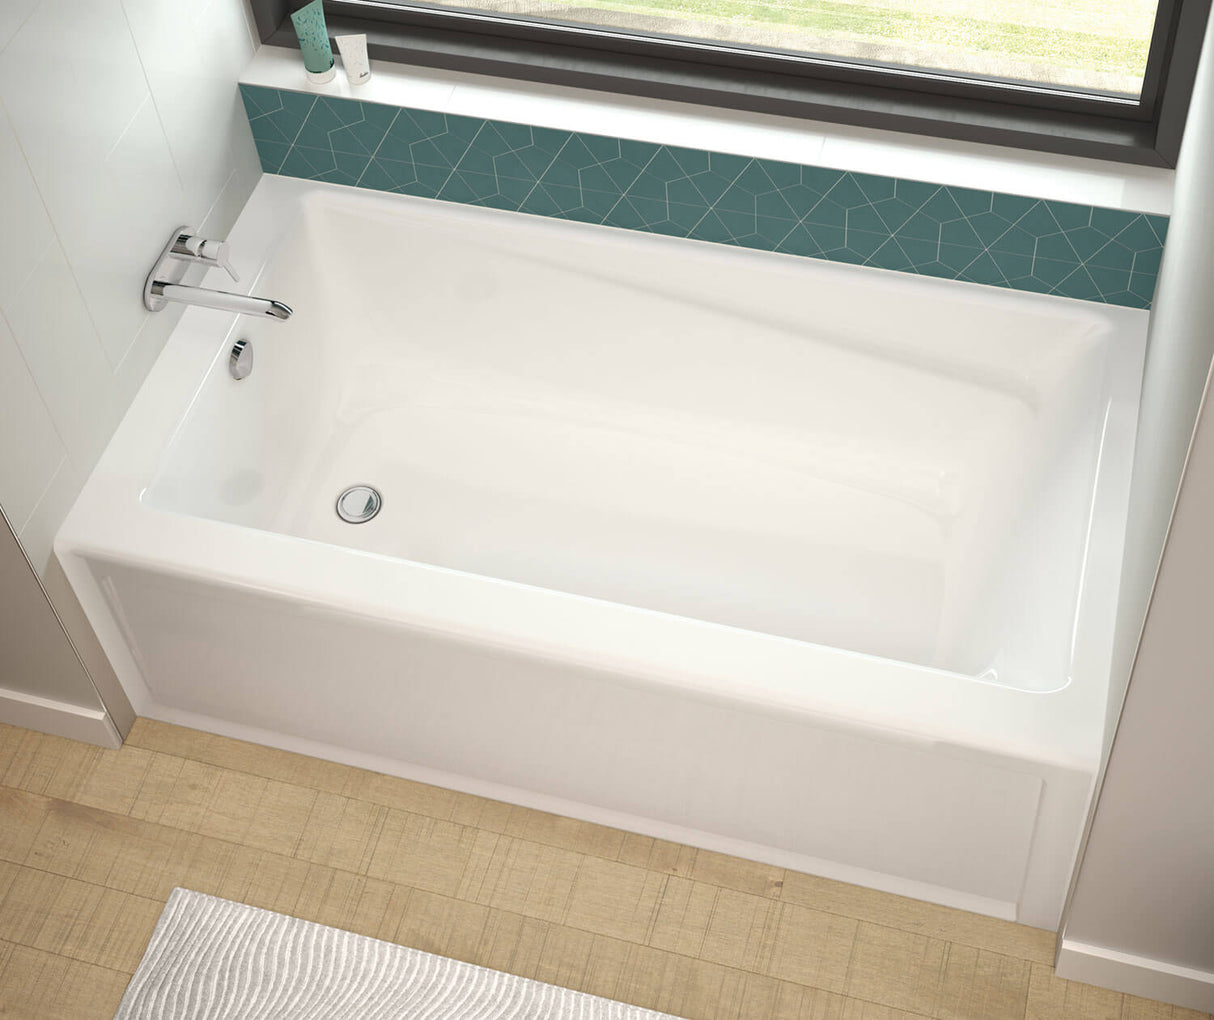 MAAX 105520-003-001-100 Exhibit 6032 IFS Acrylic Alcove Left-Hand Drain Whirlpool Bathtub in White